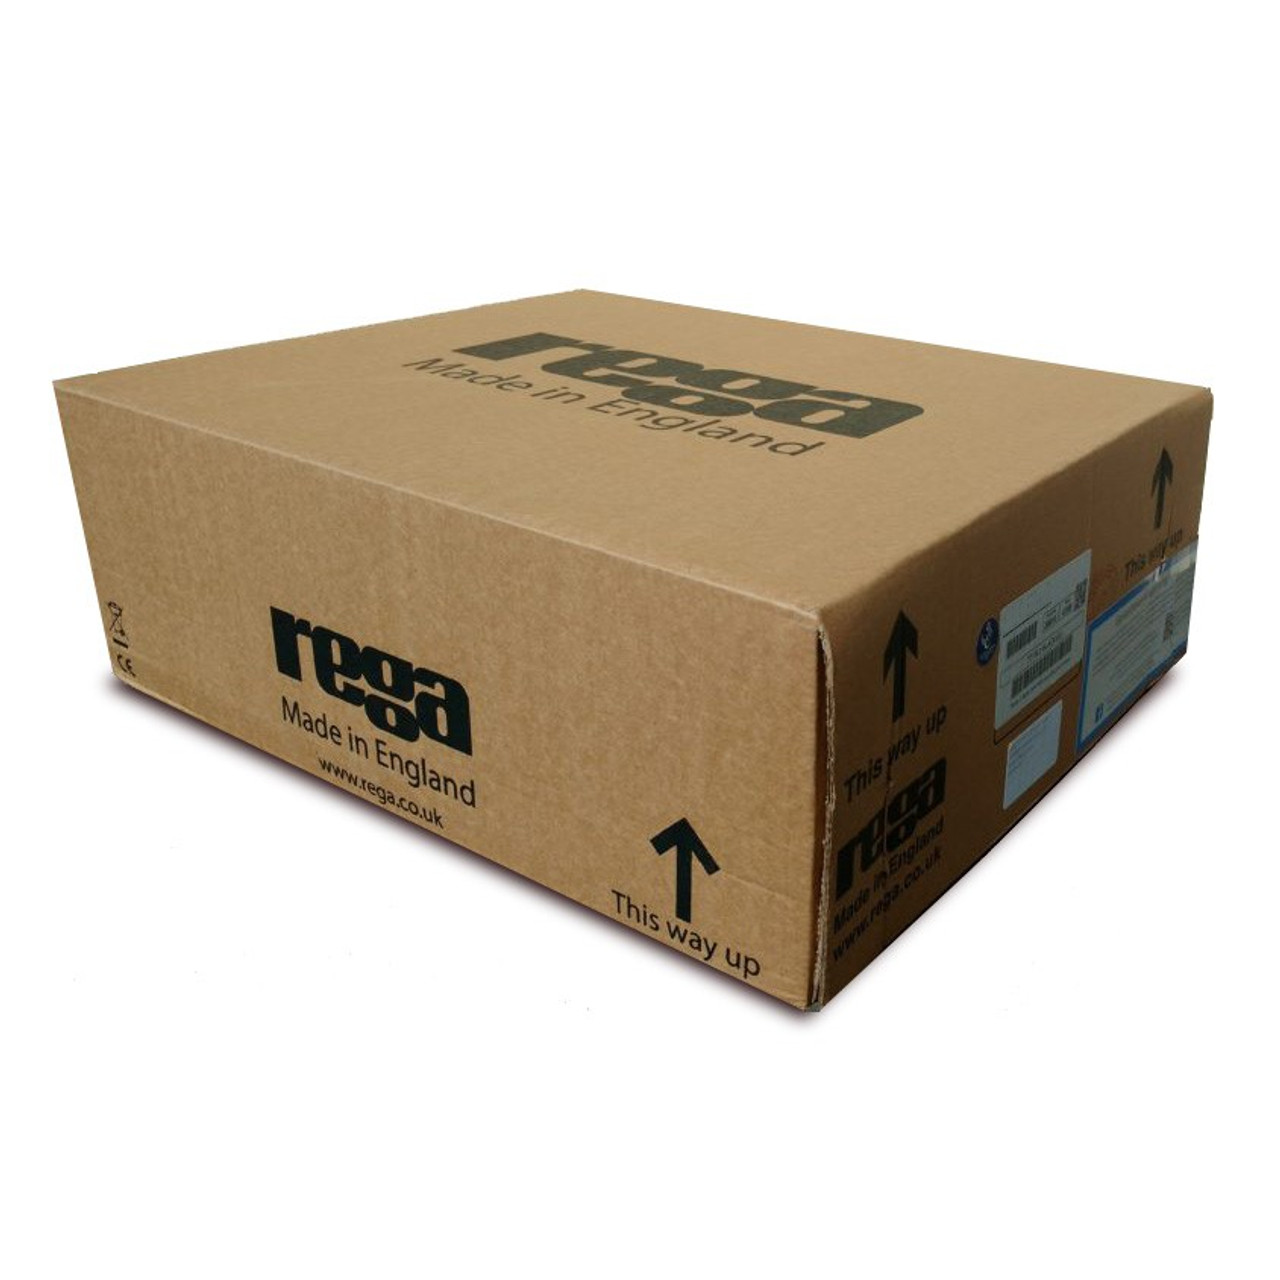 Rega Turntable Packaging - The Sound Organisation